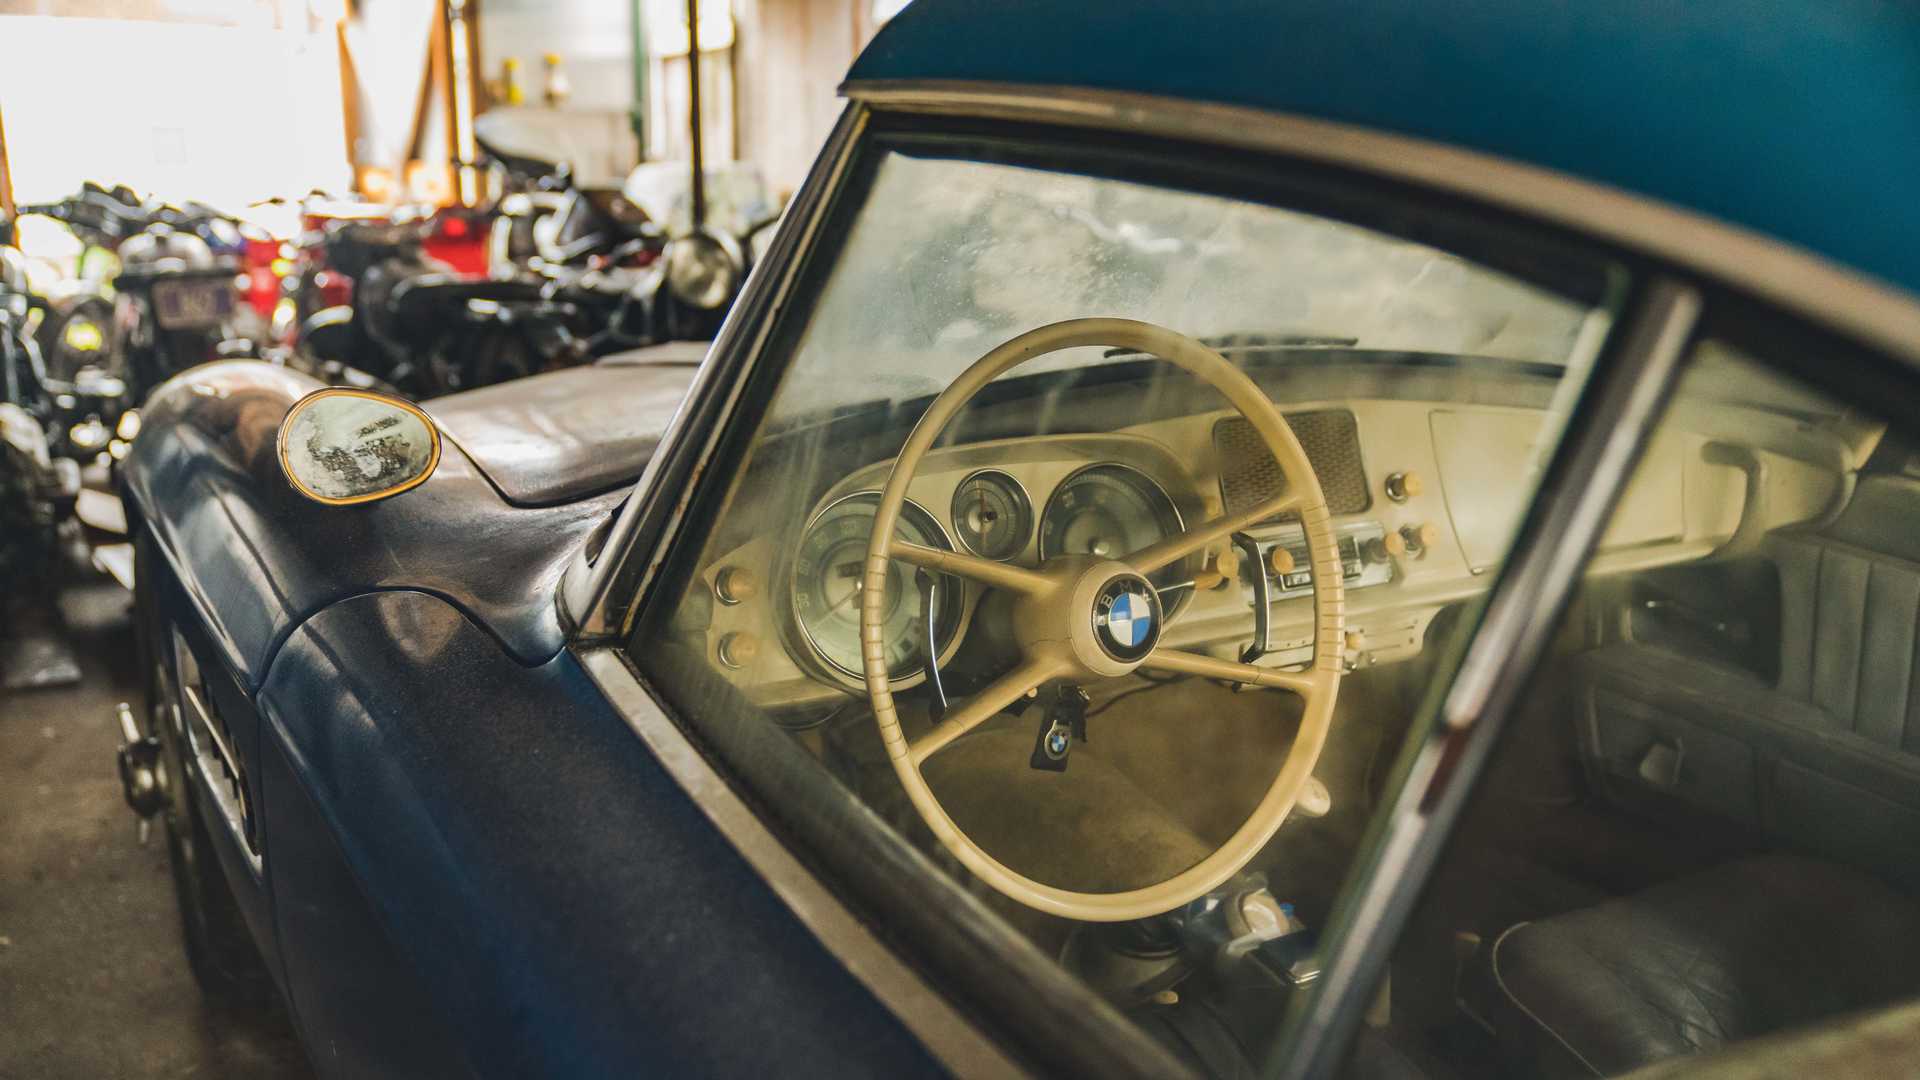 BMW 507